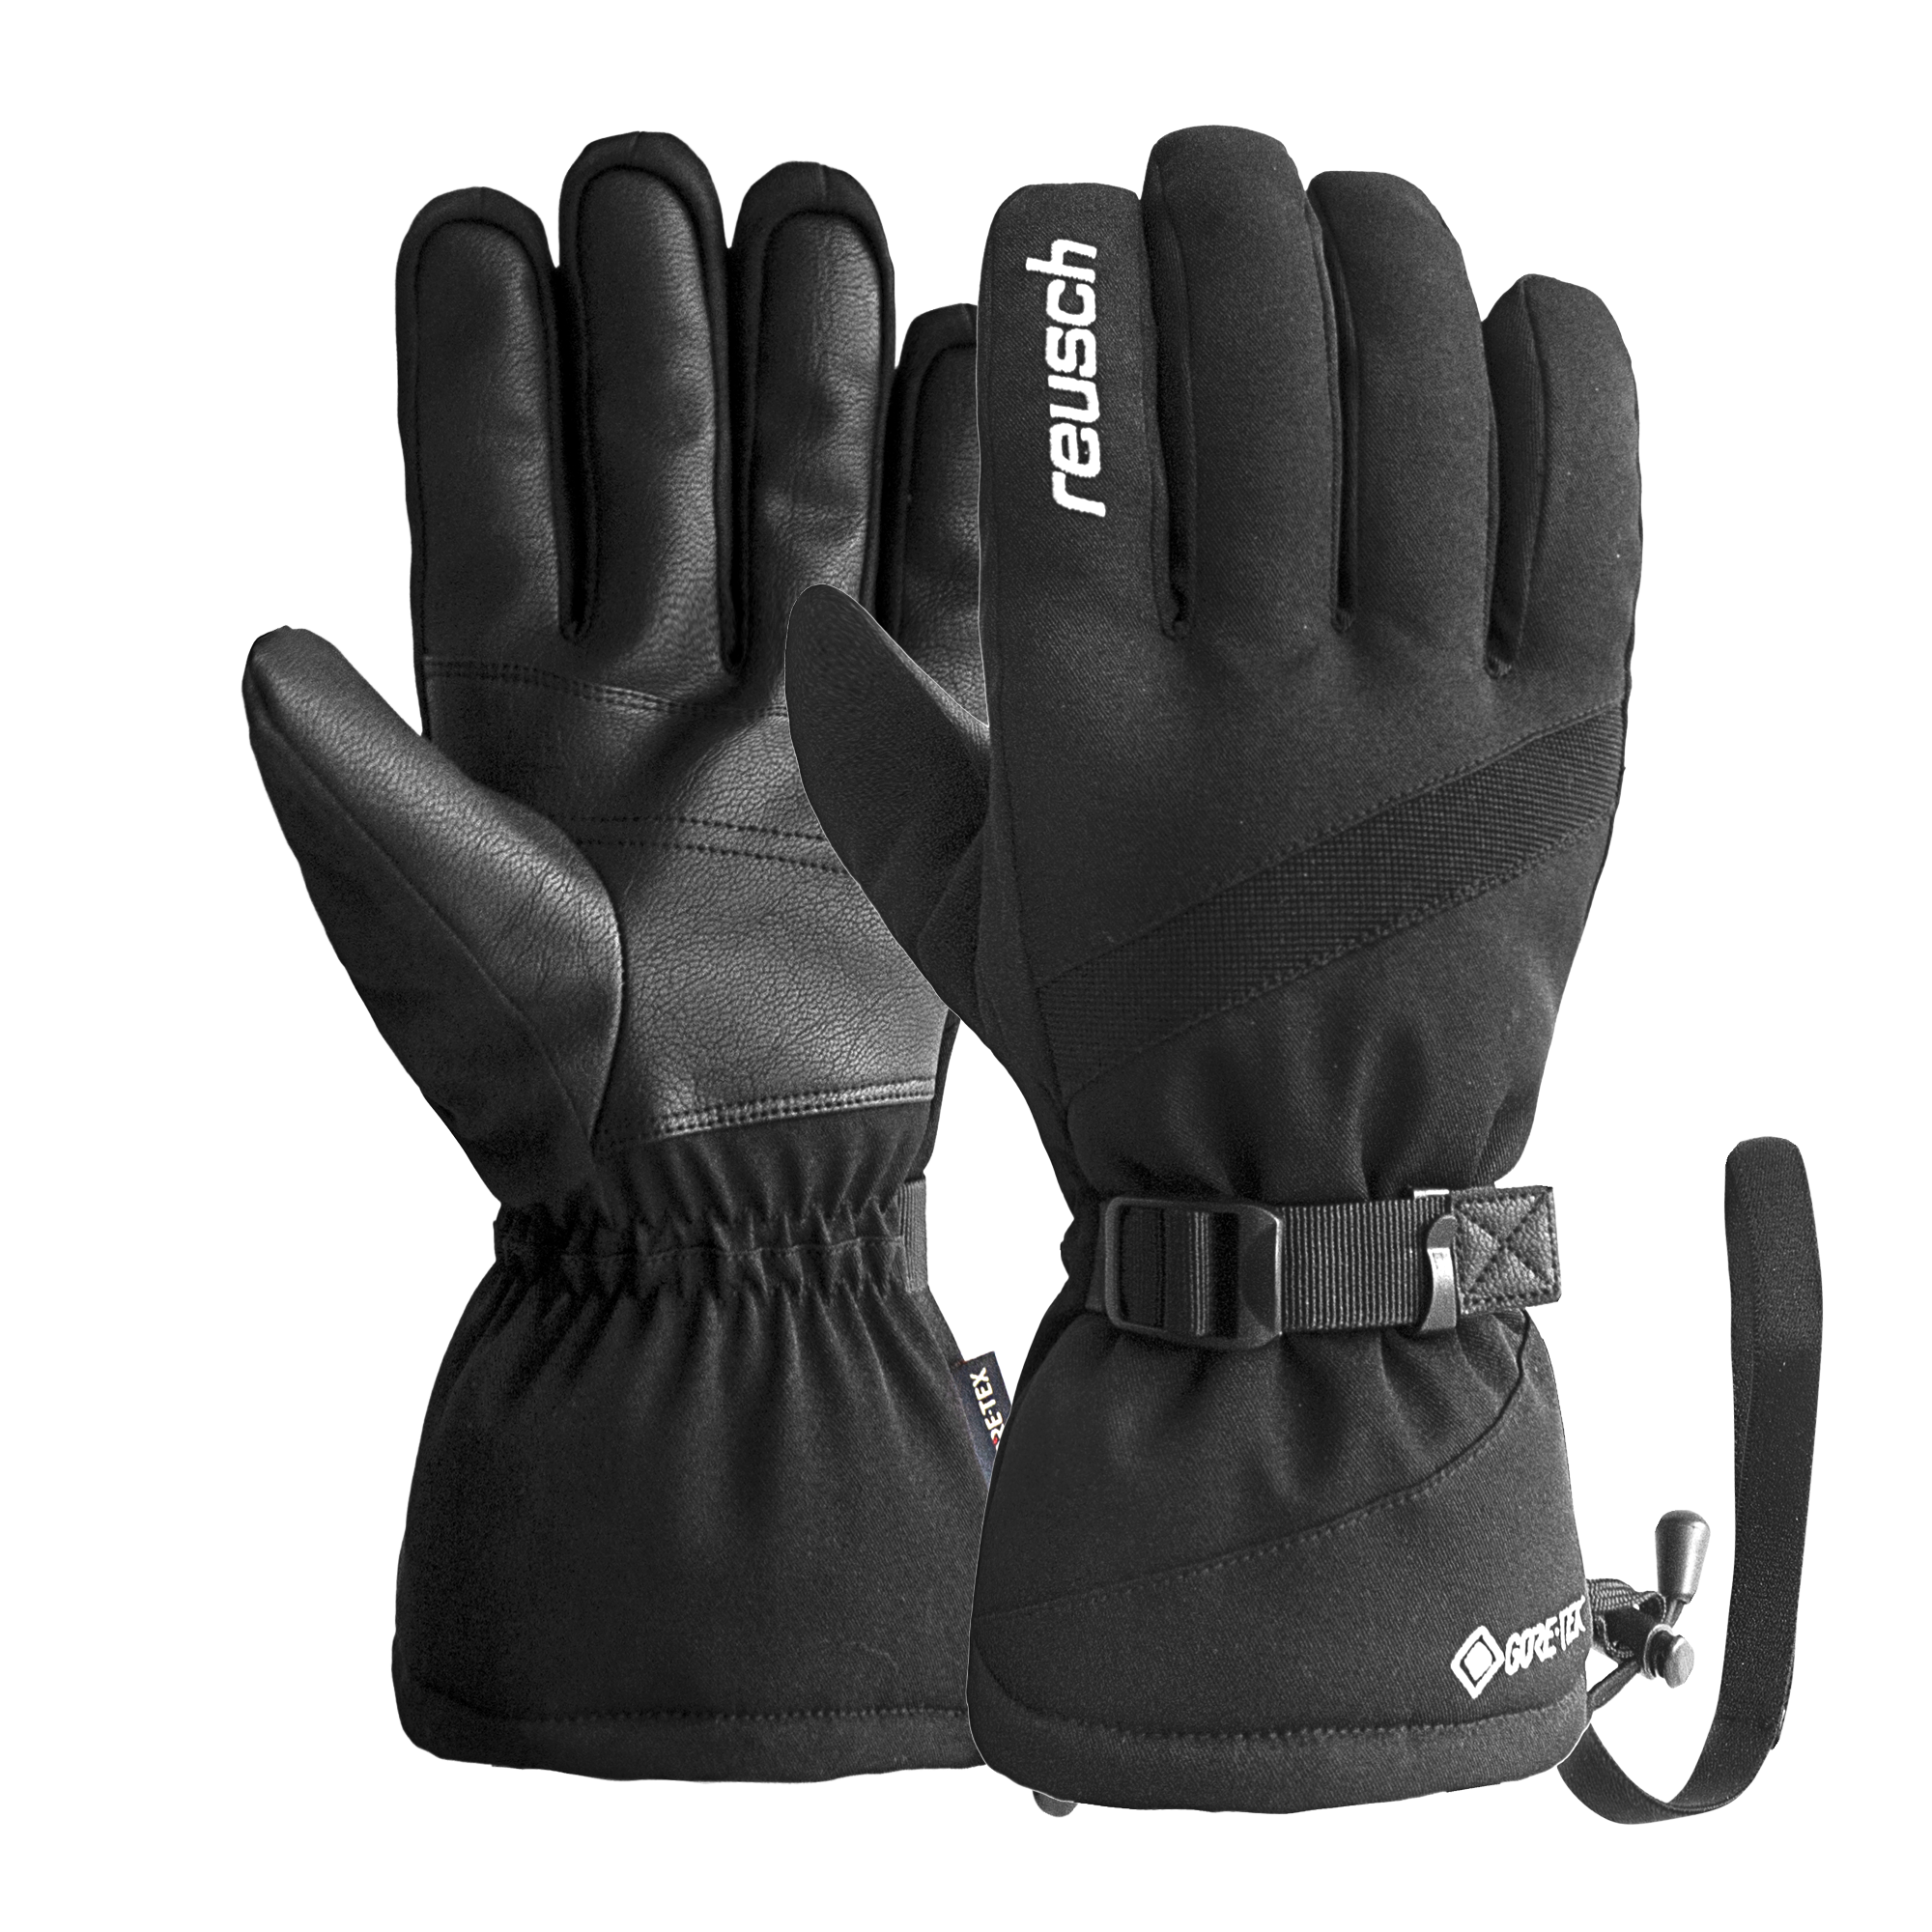 Warm Glove Winter Reusch GORE-TEX